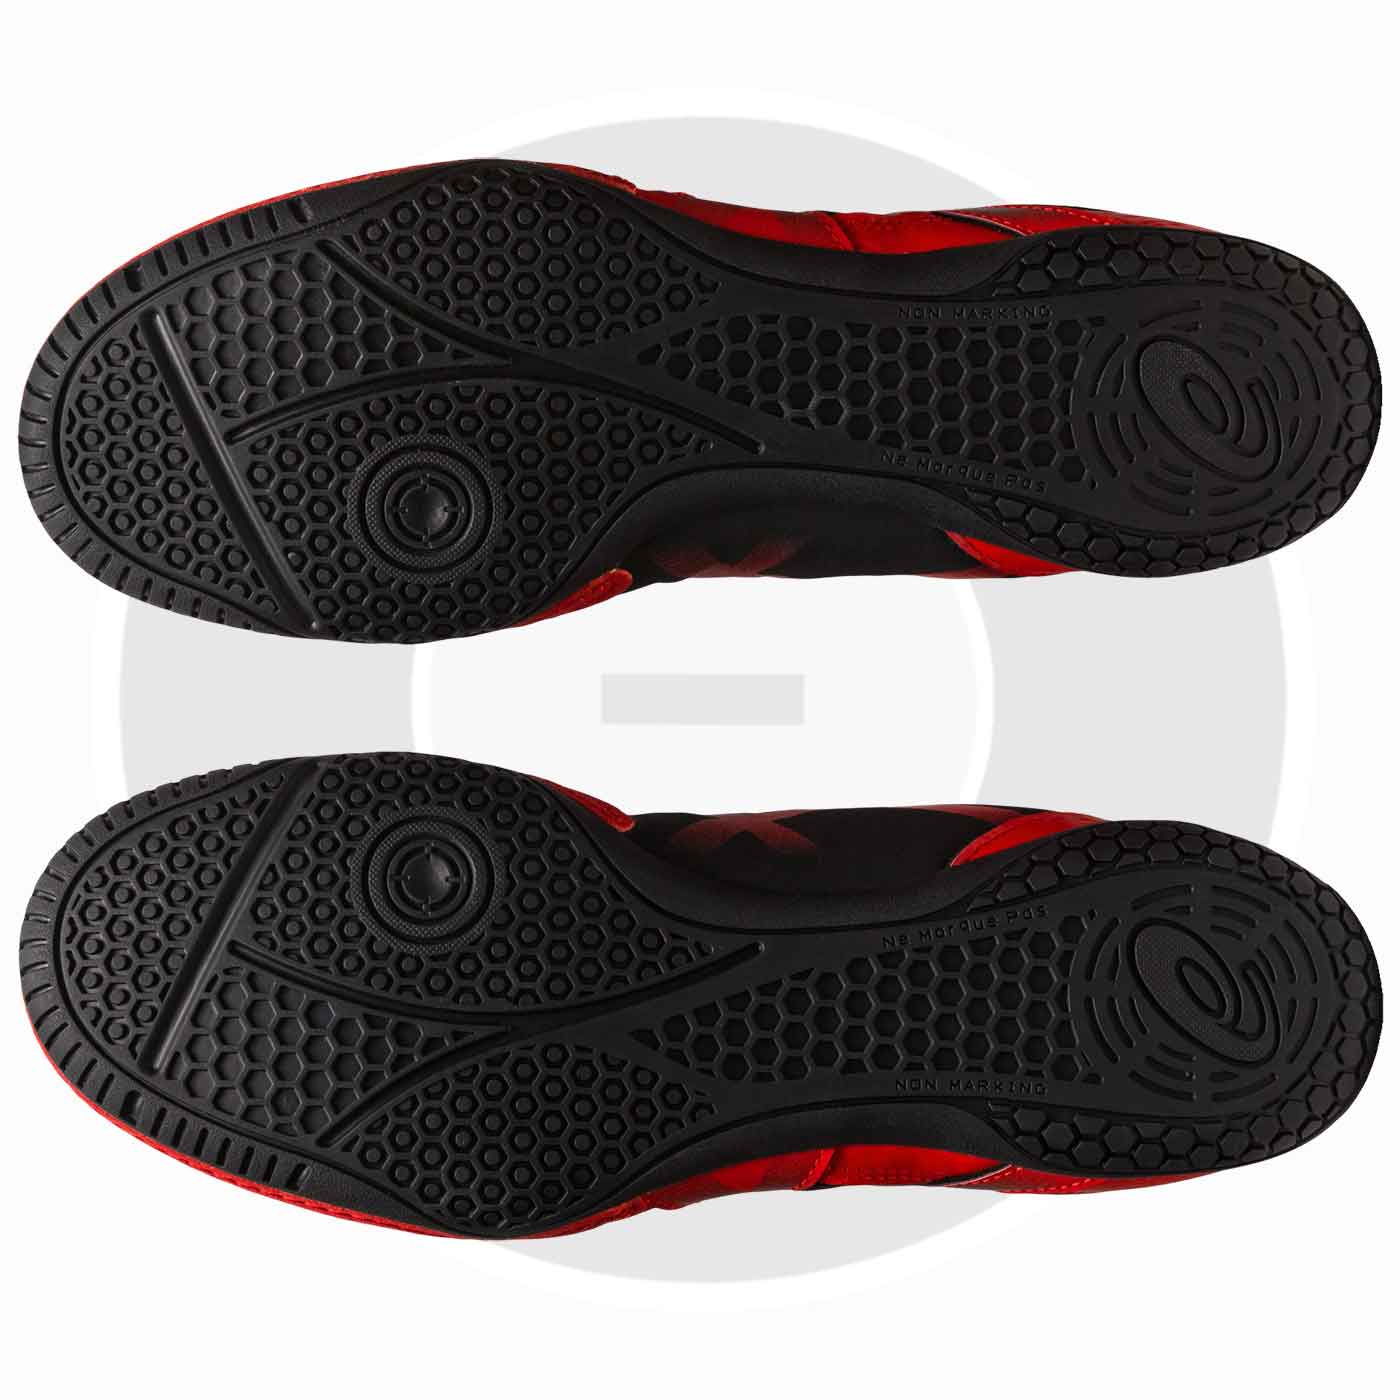 ASICS Men's Matcontrol 3 Wrestling Shoes, Size 11.5, Black/Silver